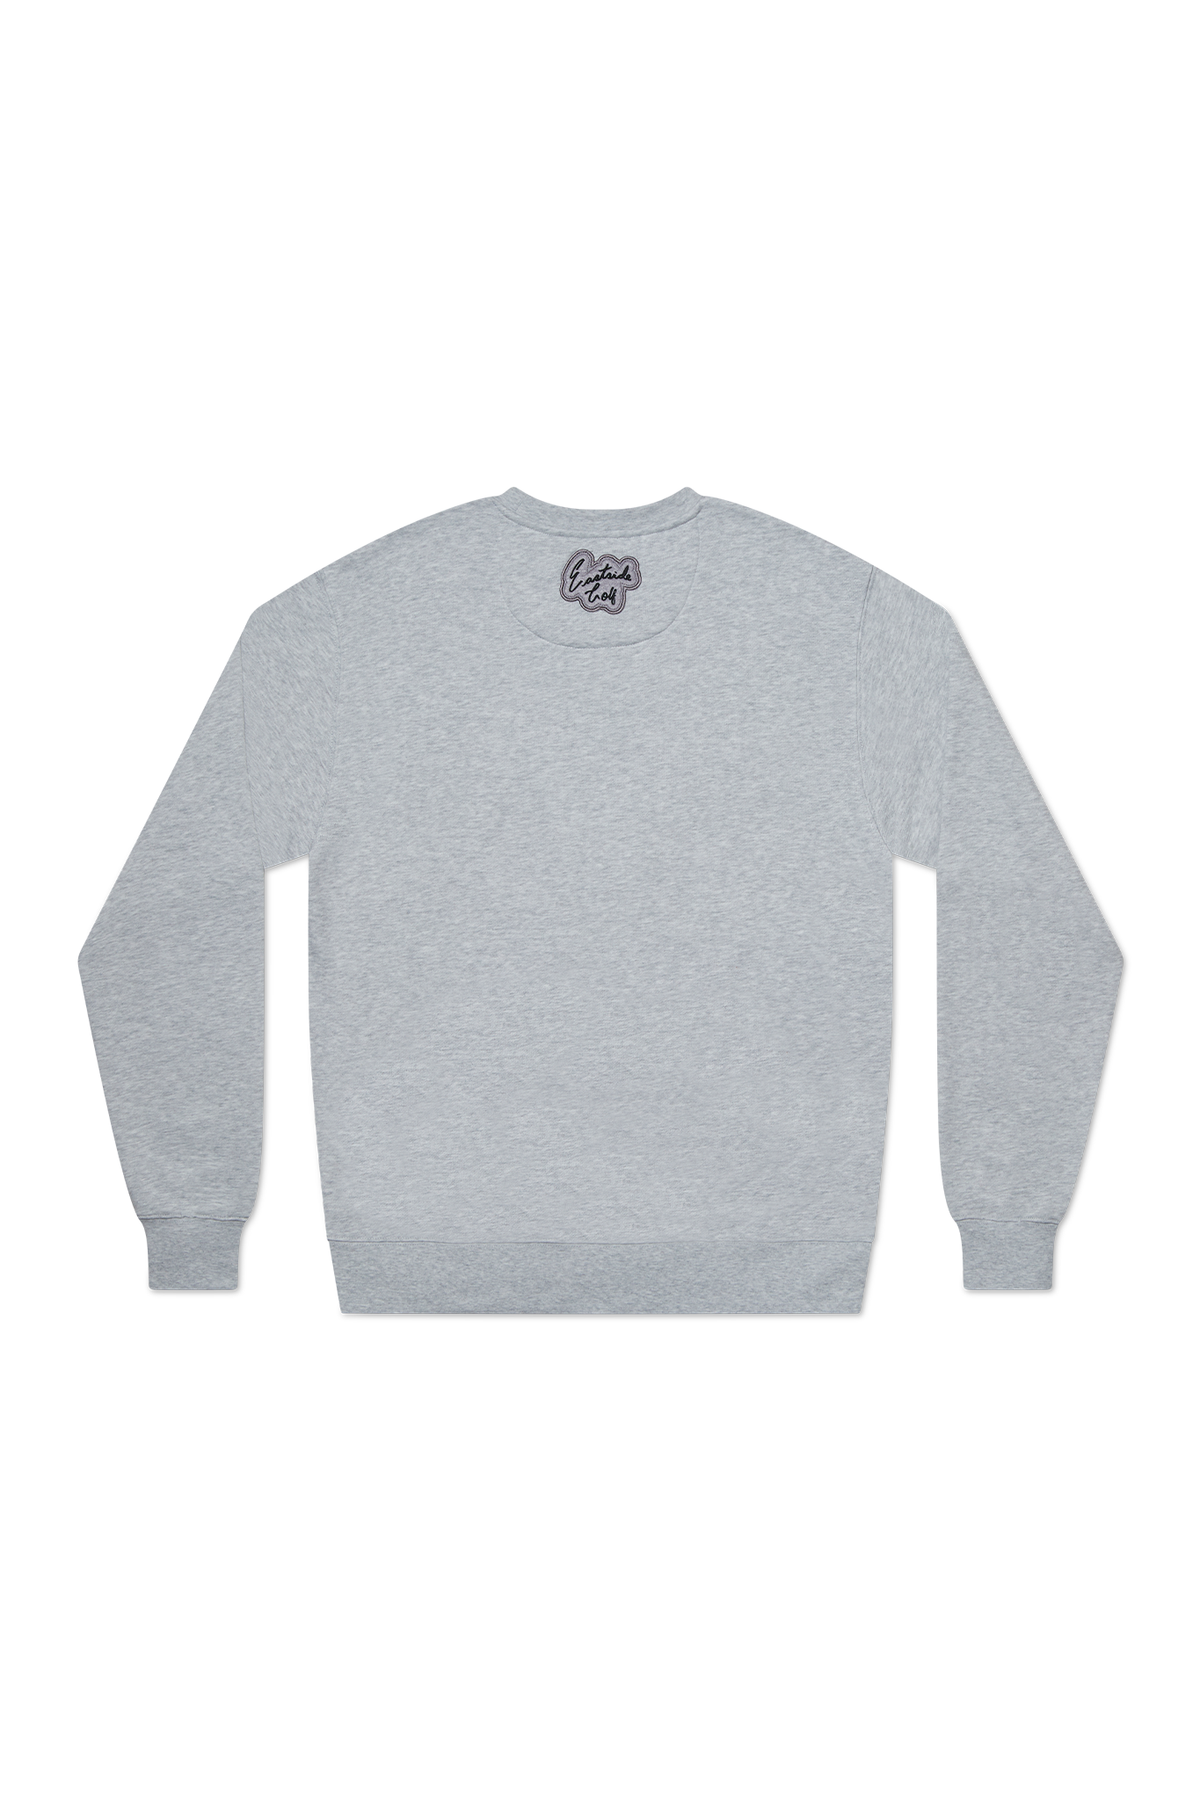 Eastside Staple Sweatshirt in Heather Grey – Eastside Golf